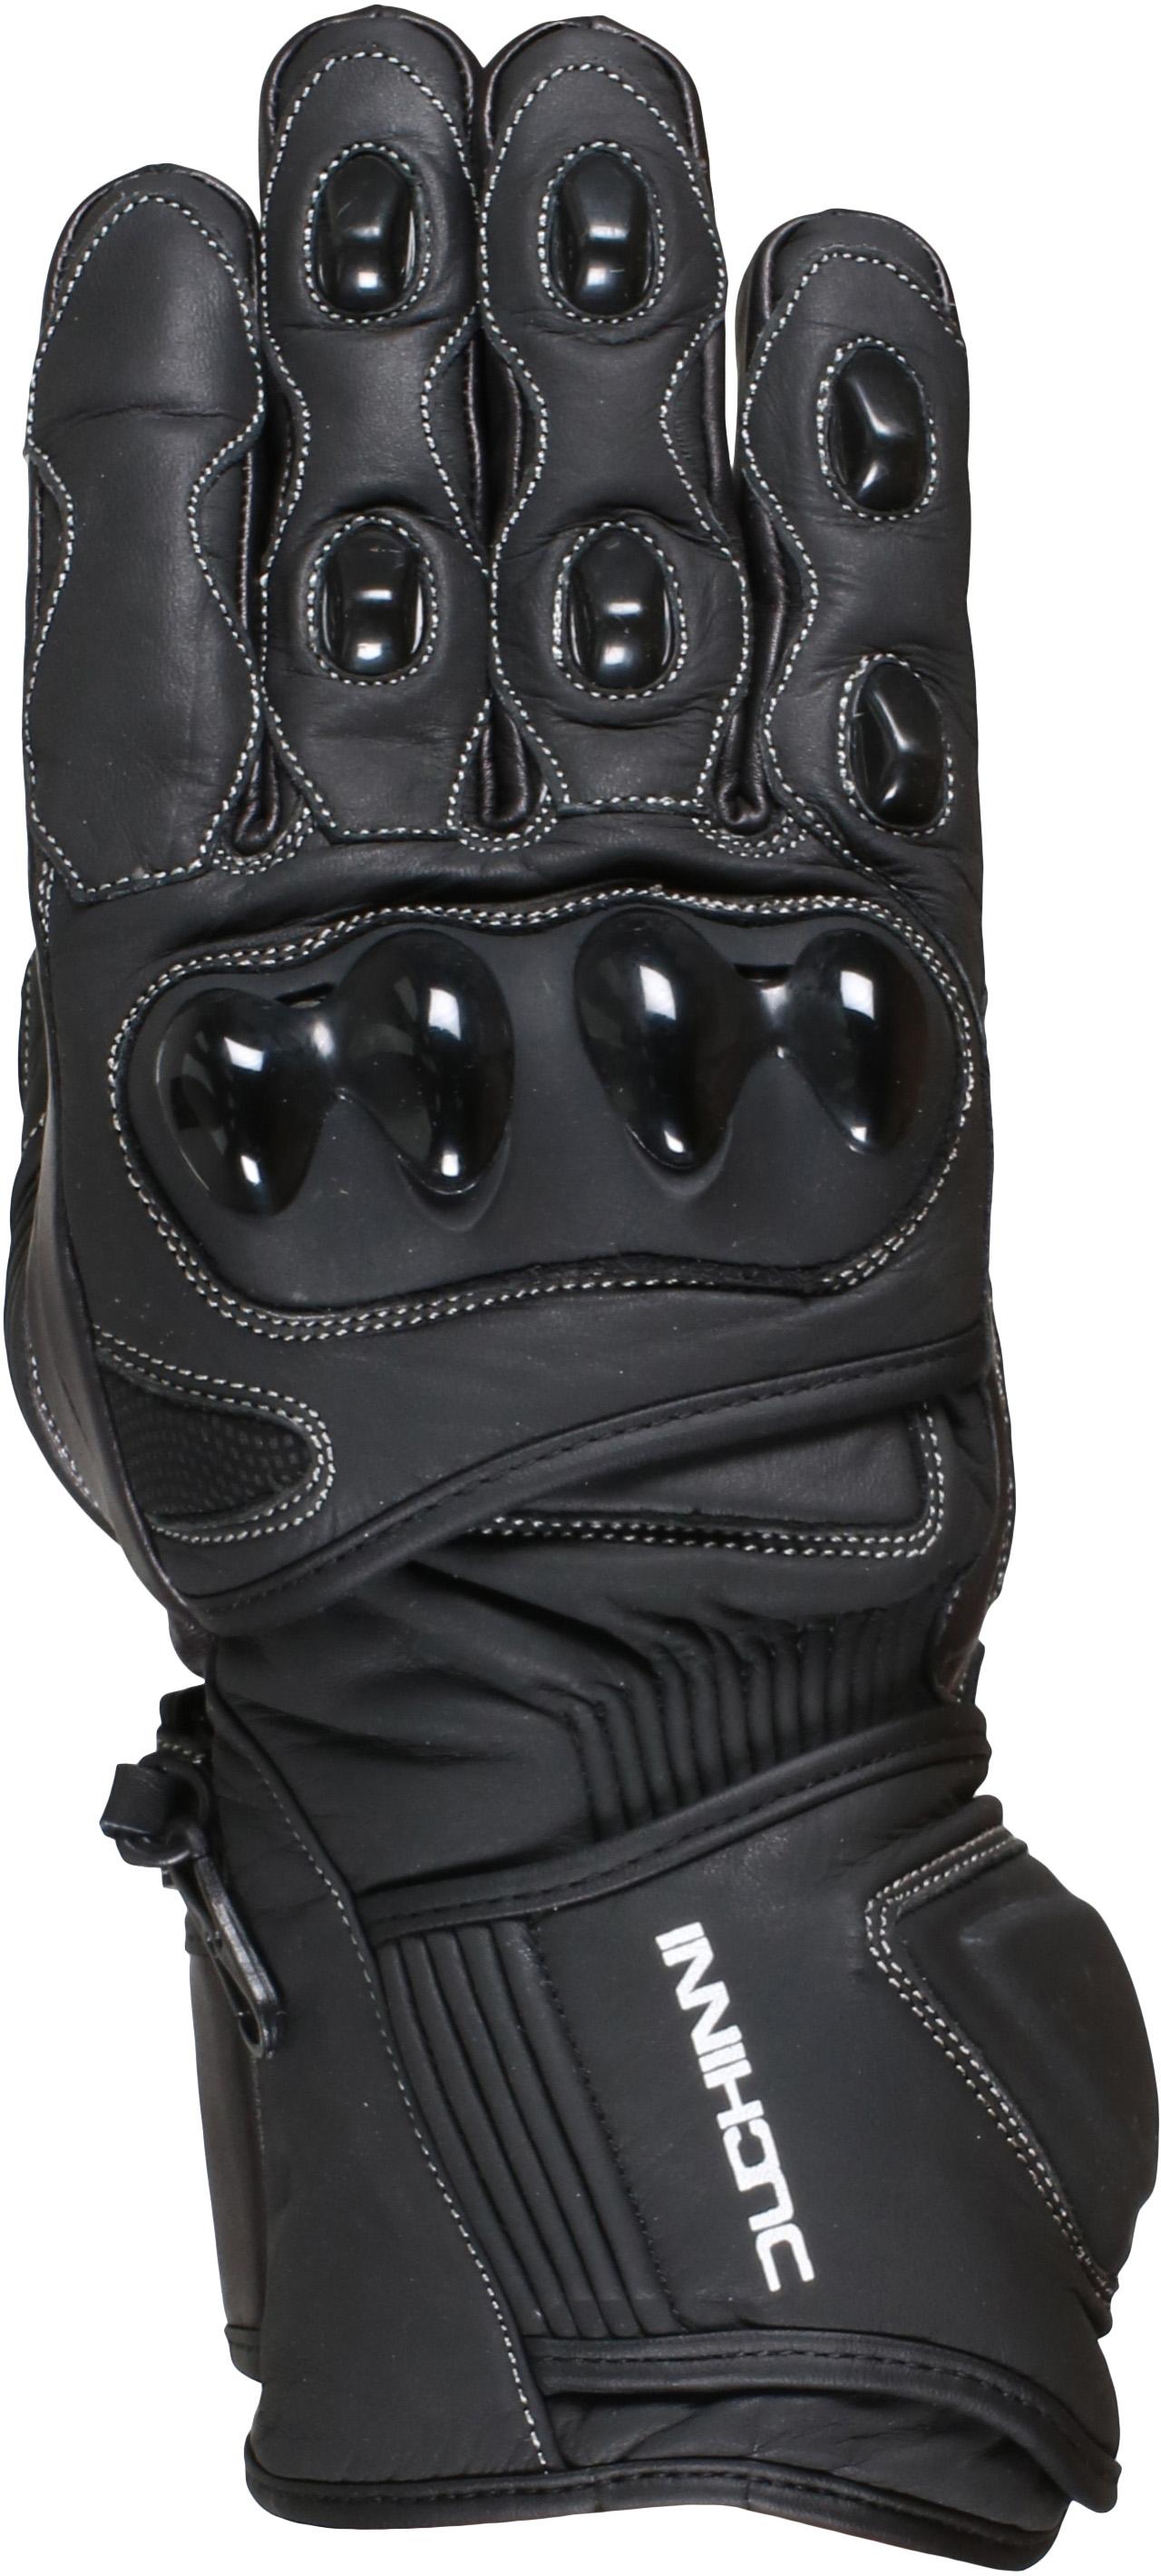 Duchinni Spartan Motorcycle Gloves - Black, 2Xl